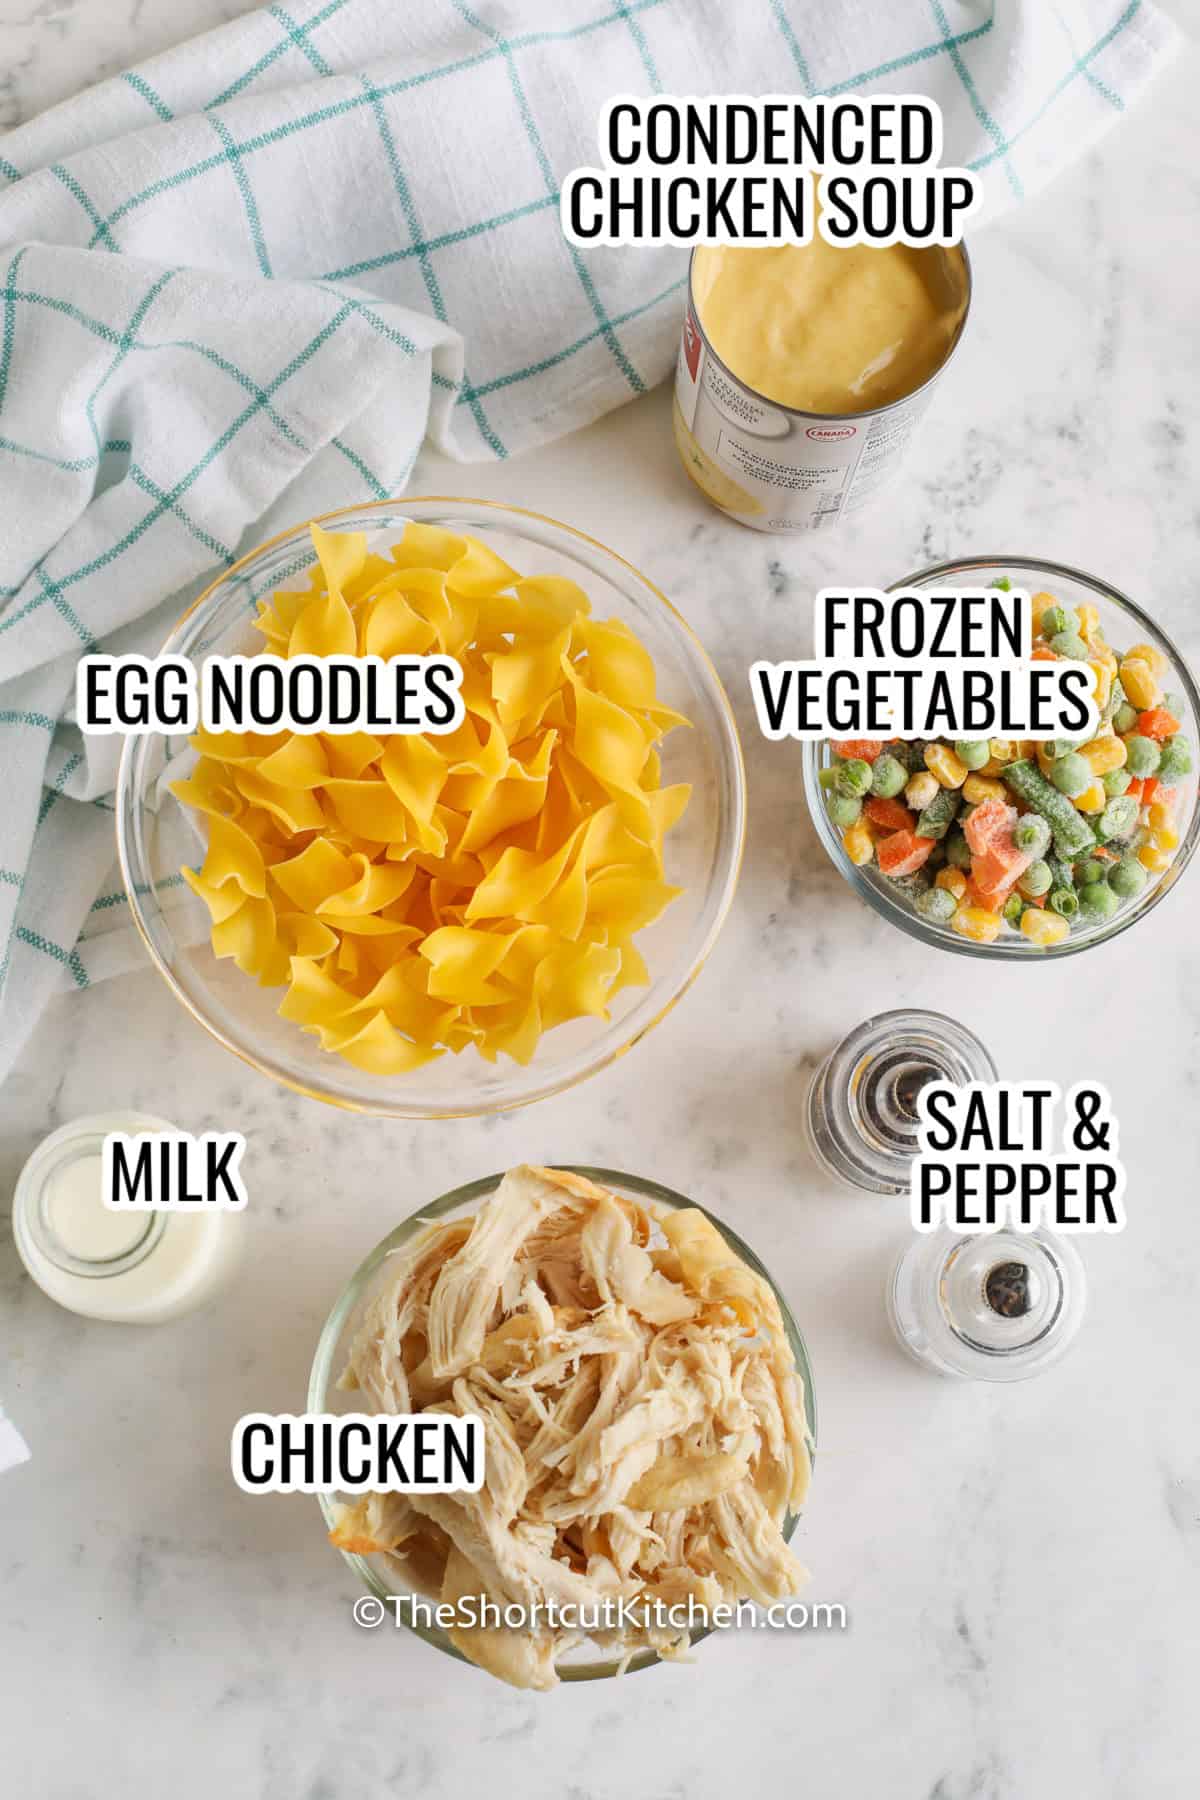 ingredients assembled to make chicken and egg noodles, including egg noodles, frozen vegetables, milk, condensed chicken soup, and chicken